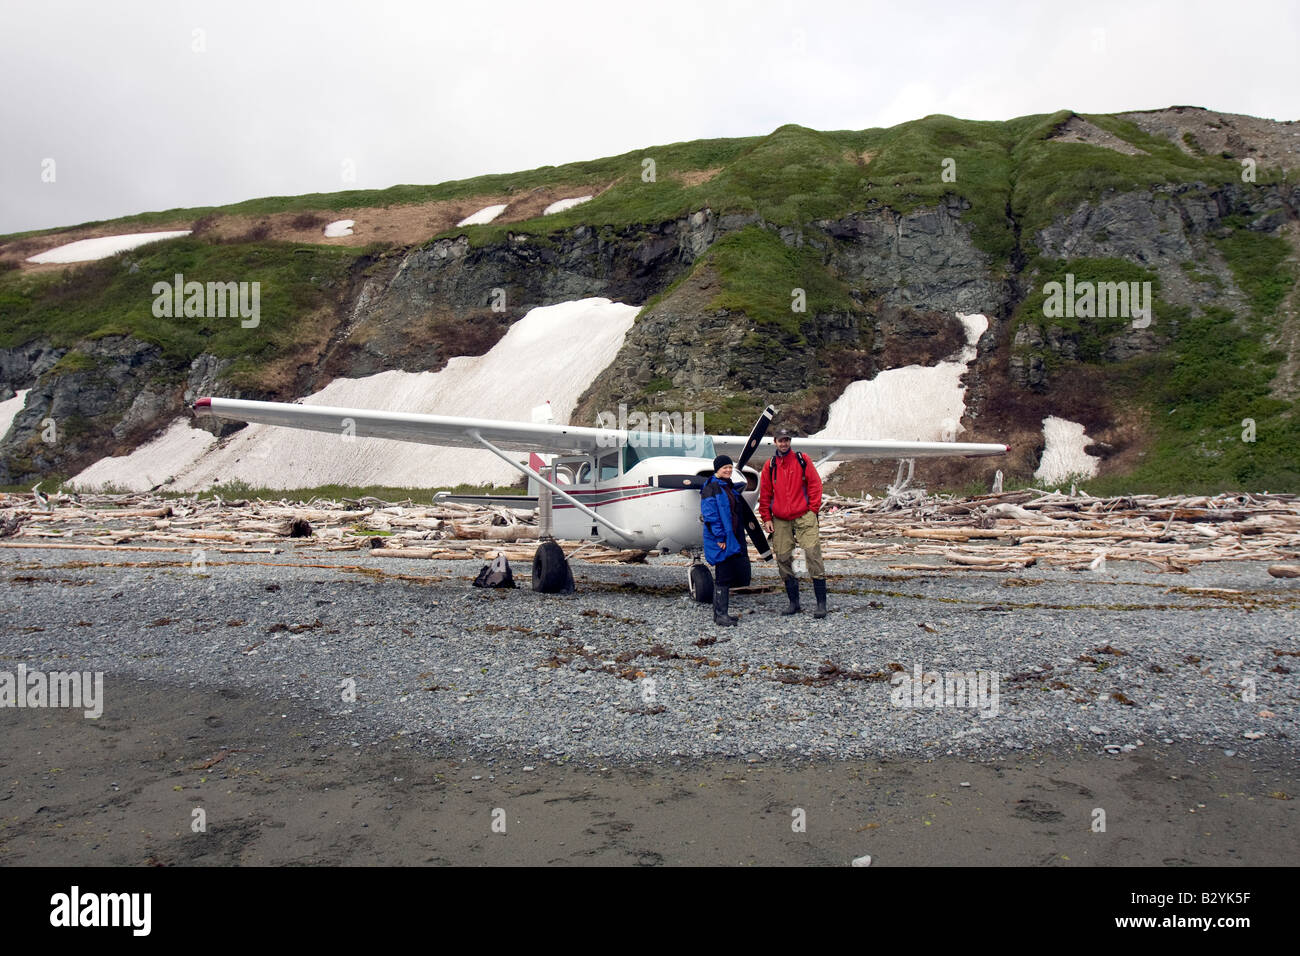 Tourist before a smal airplane on a beach in Katmai National Park & Preserve, Alaska. Stock Photo